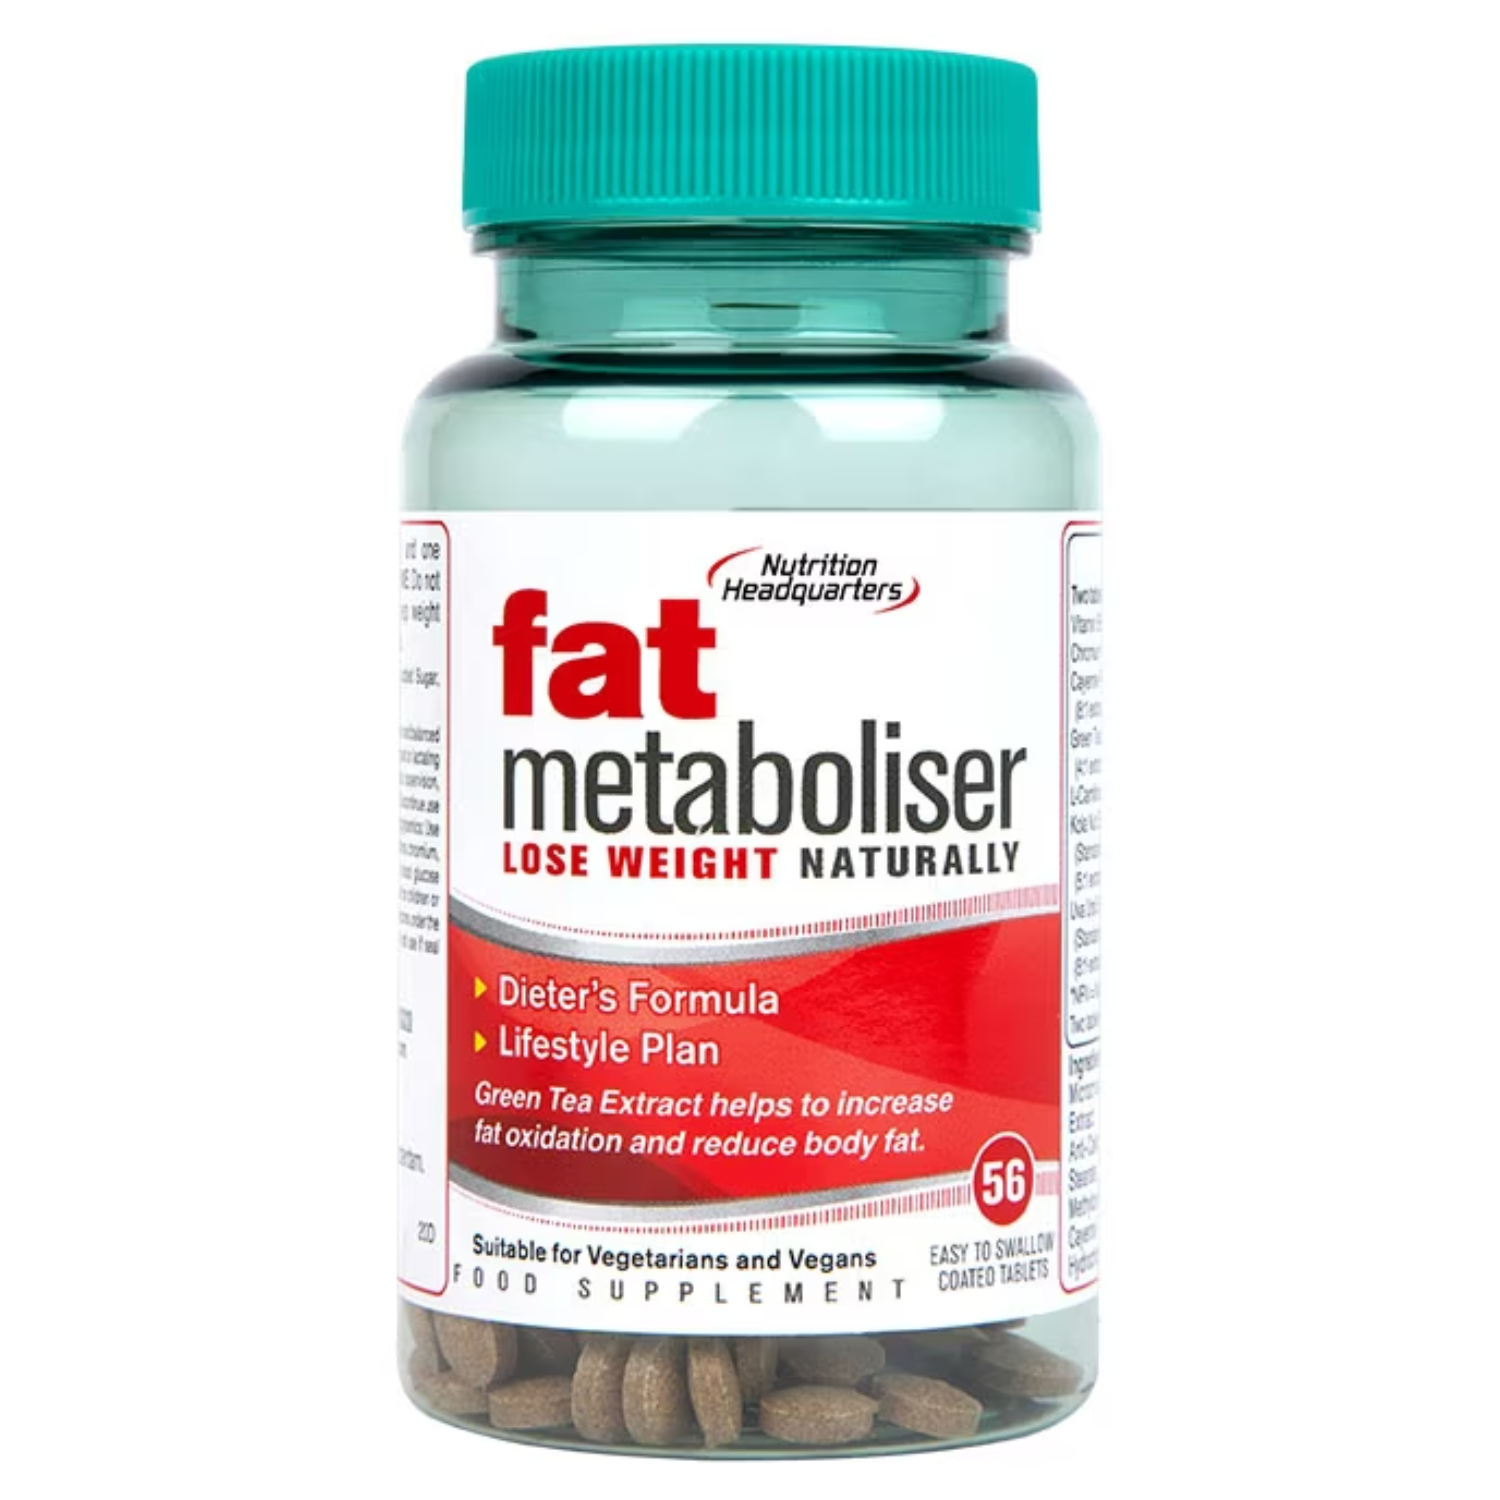 'Holland And Barrett Nutritional Headquarters Fat Metaboliser Tablets 56's